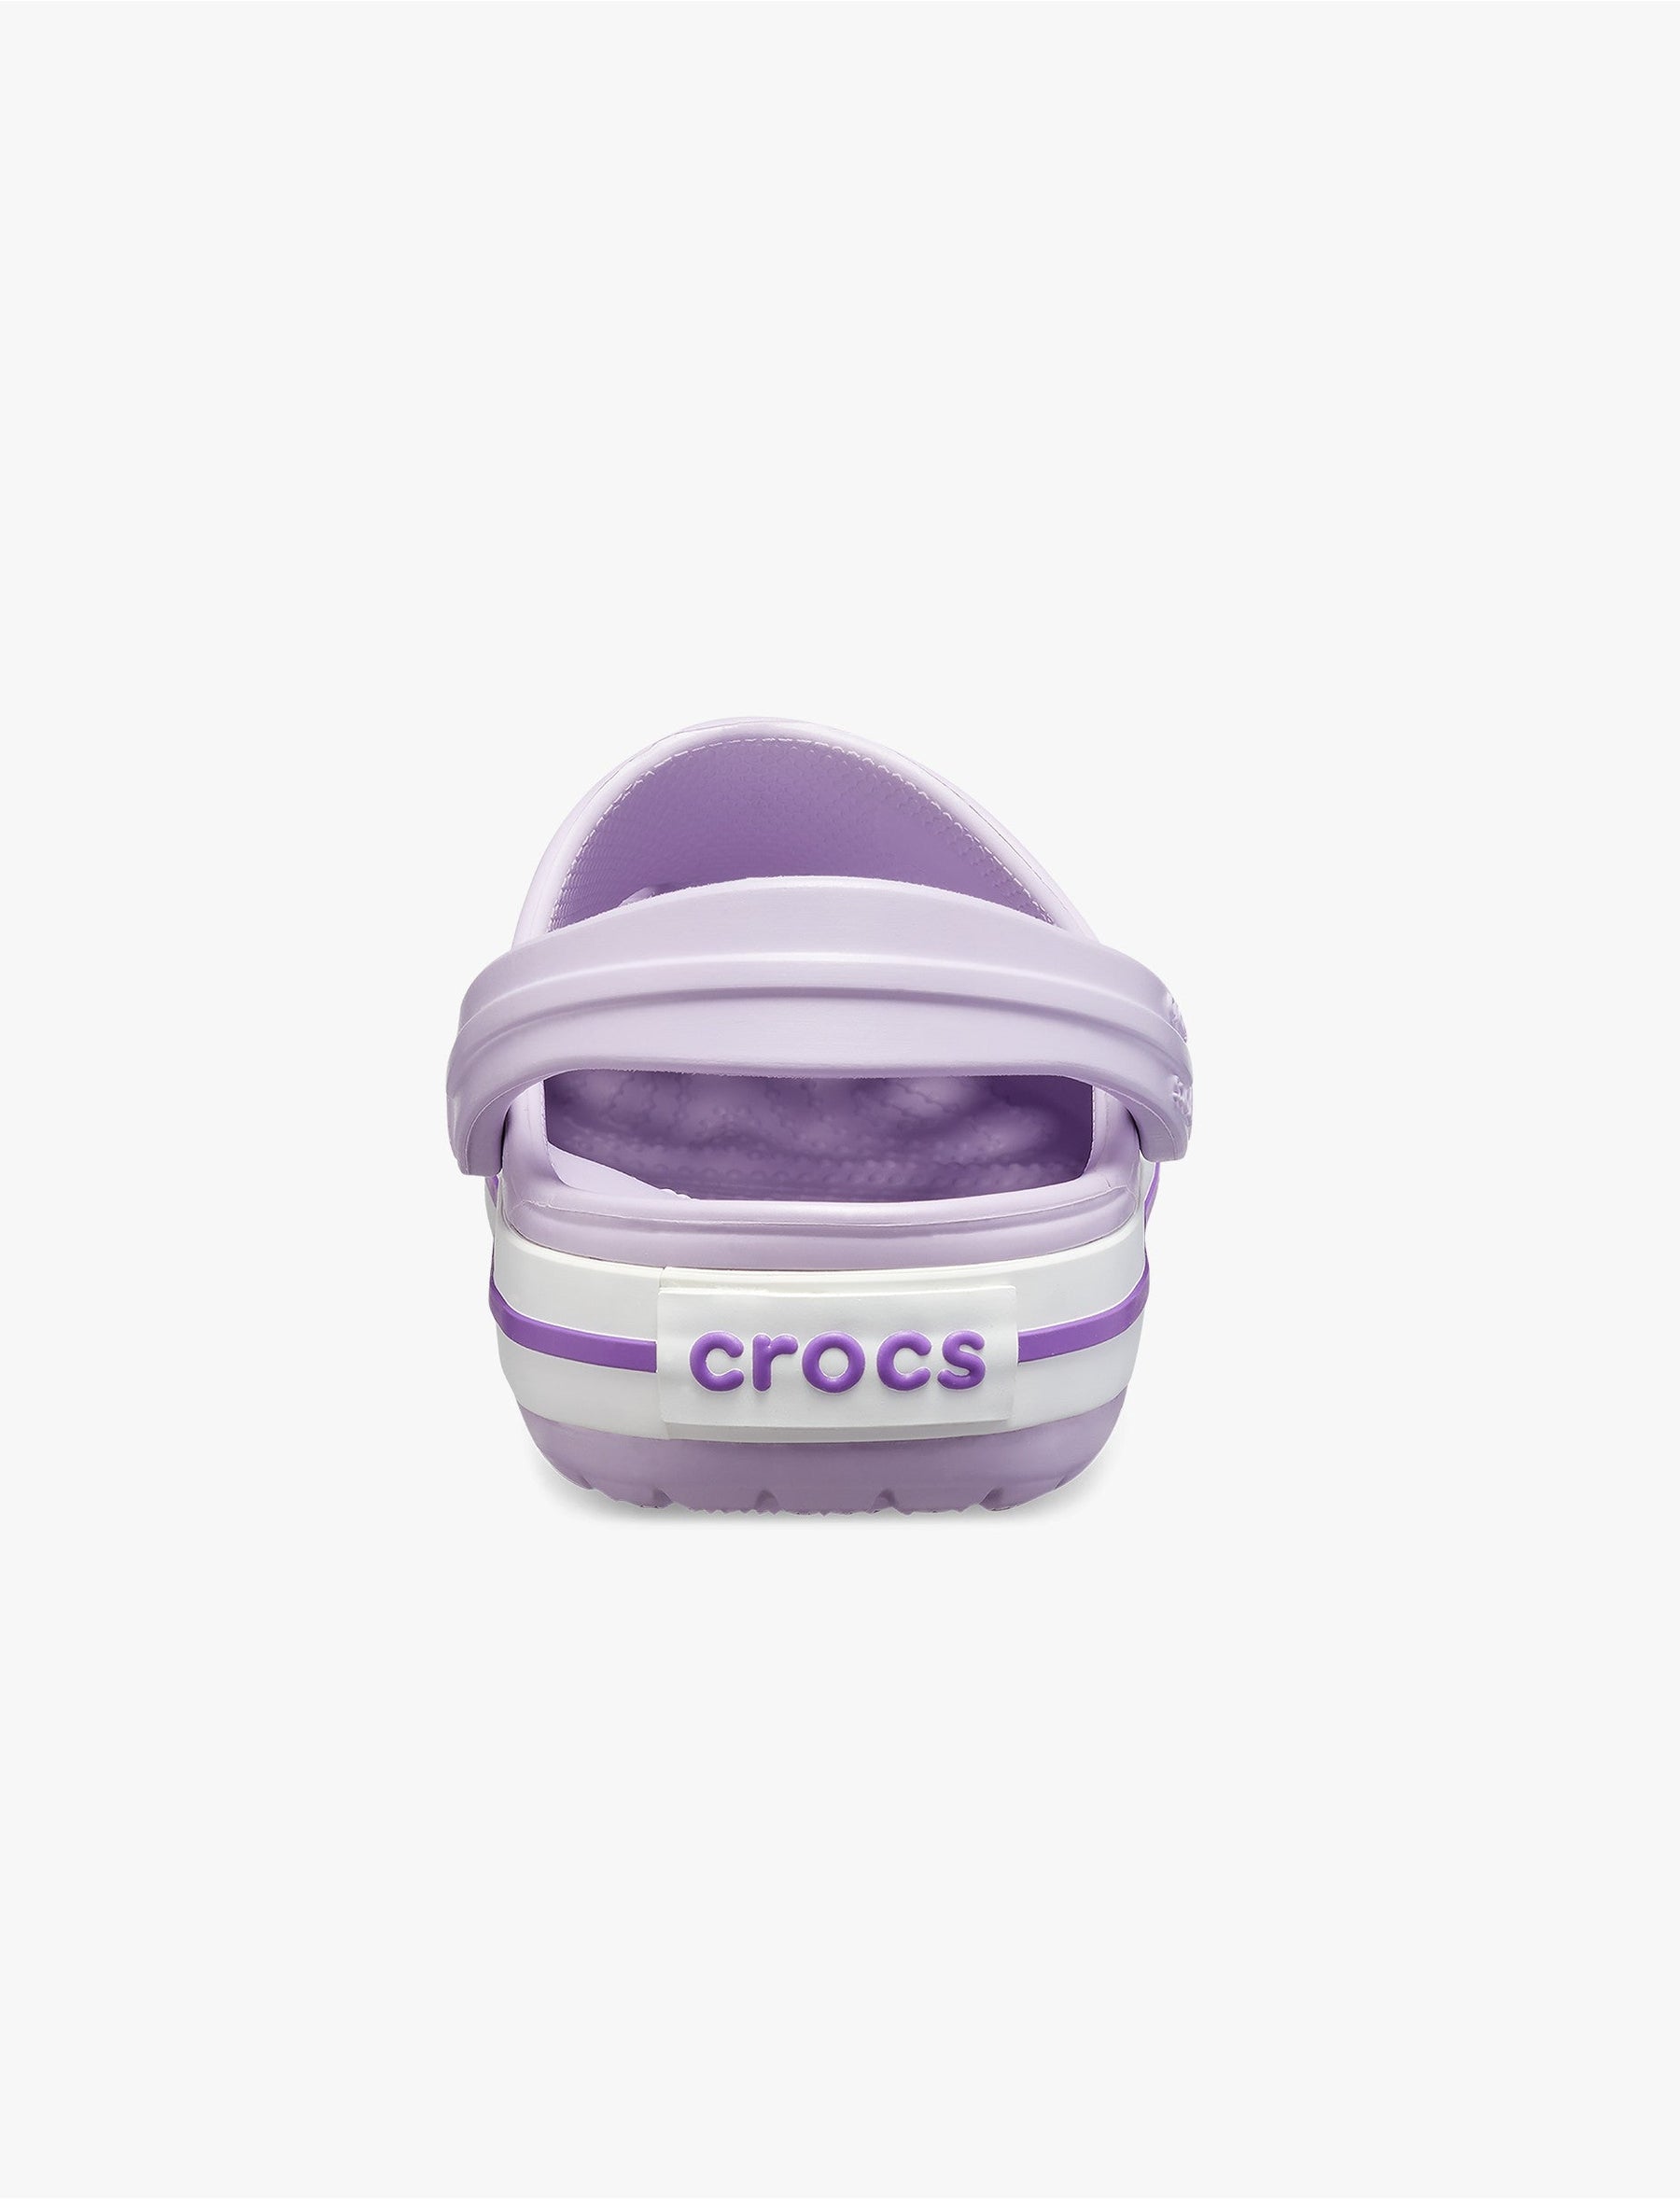 Crocs CrocBand Clog T - כפכפים לילדים קרוקס קרוקבנד בצבע לבנדר/סגול נאון מידות קטנות-Crocs-24-25-נאקו